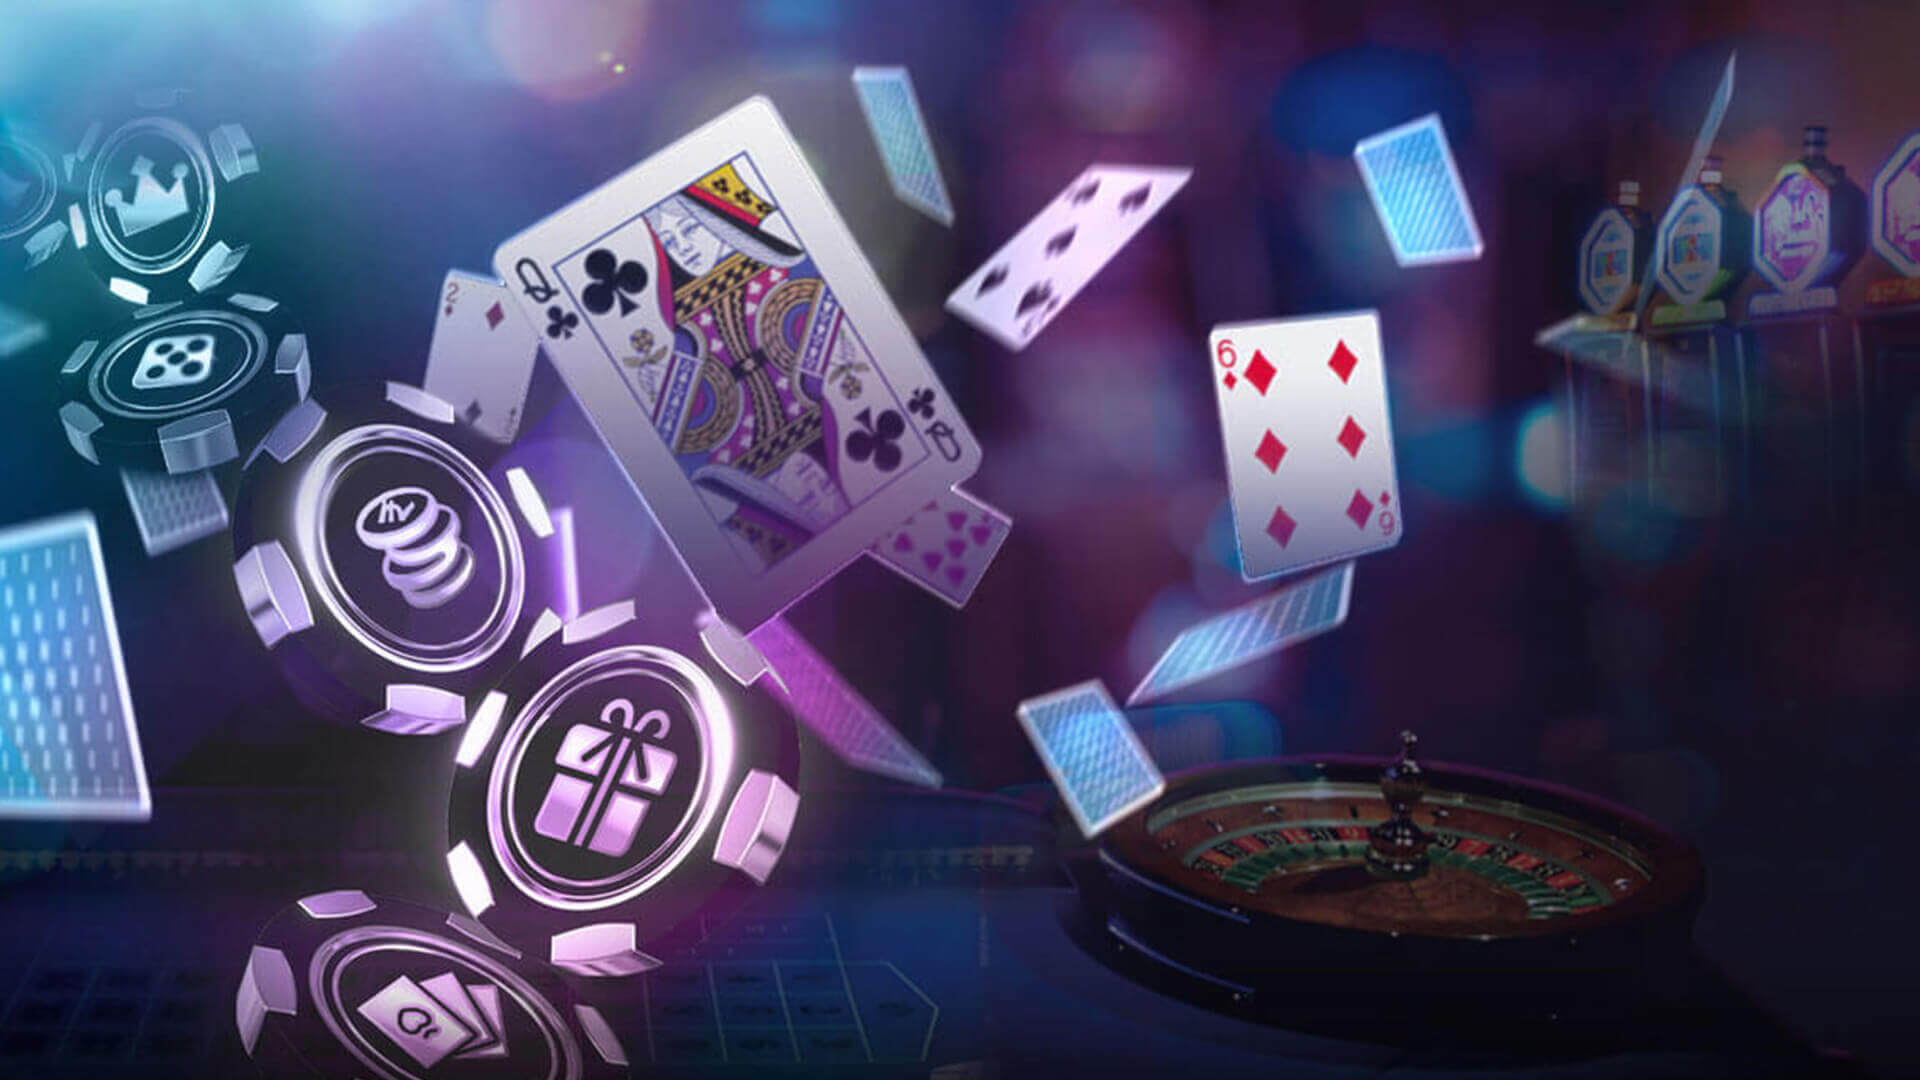 Casino games at 1bet: roulette, blackjack, slot machines